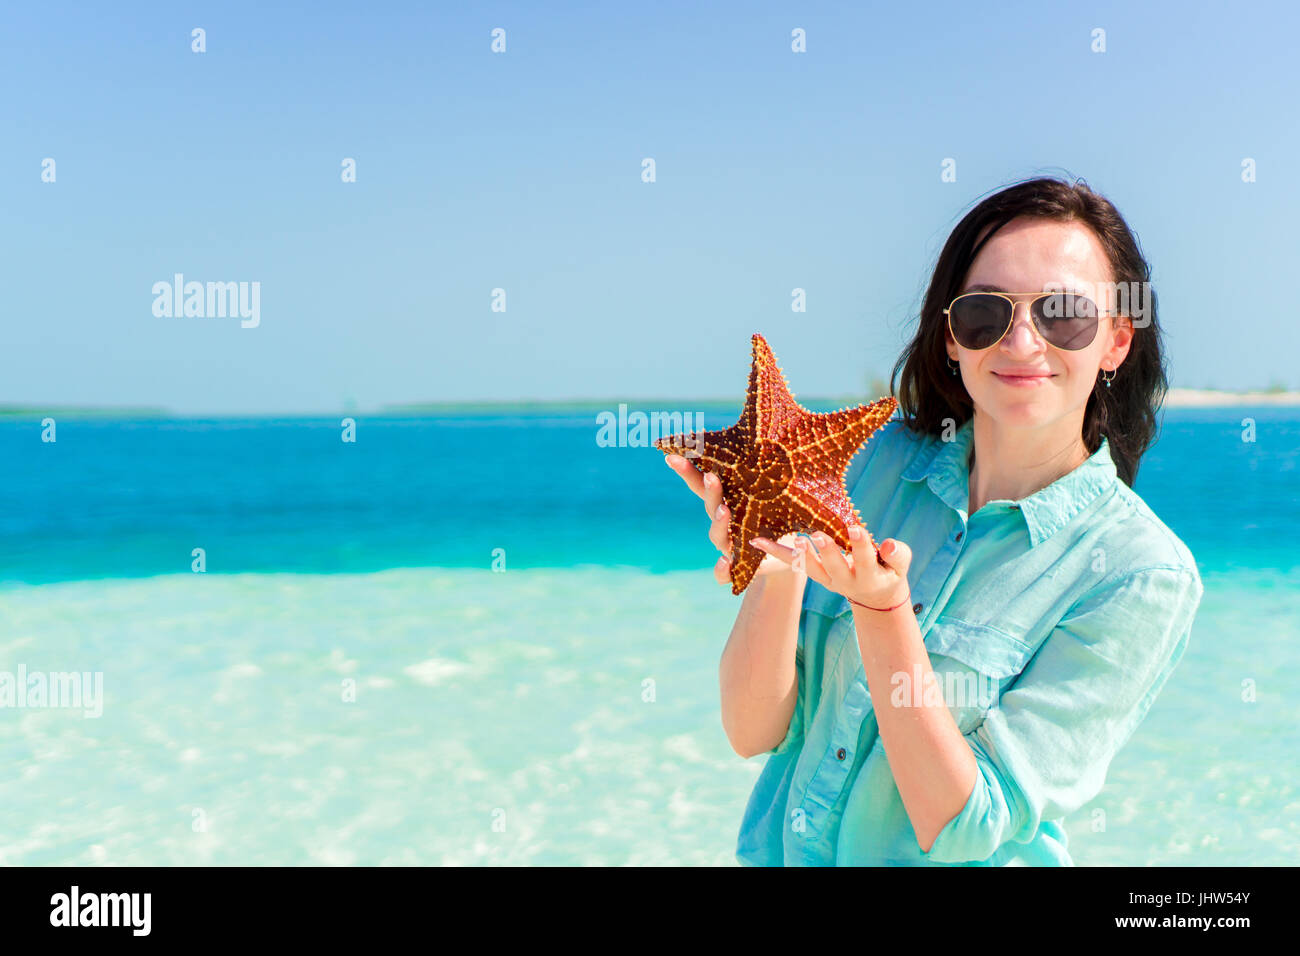 Adorable Girl With Starfish On The Beach Stock Photo Alamy